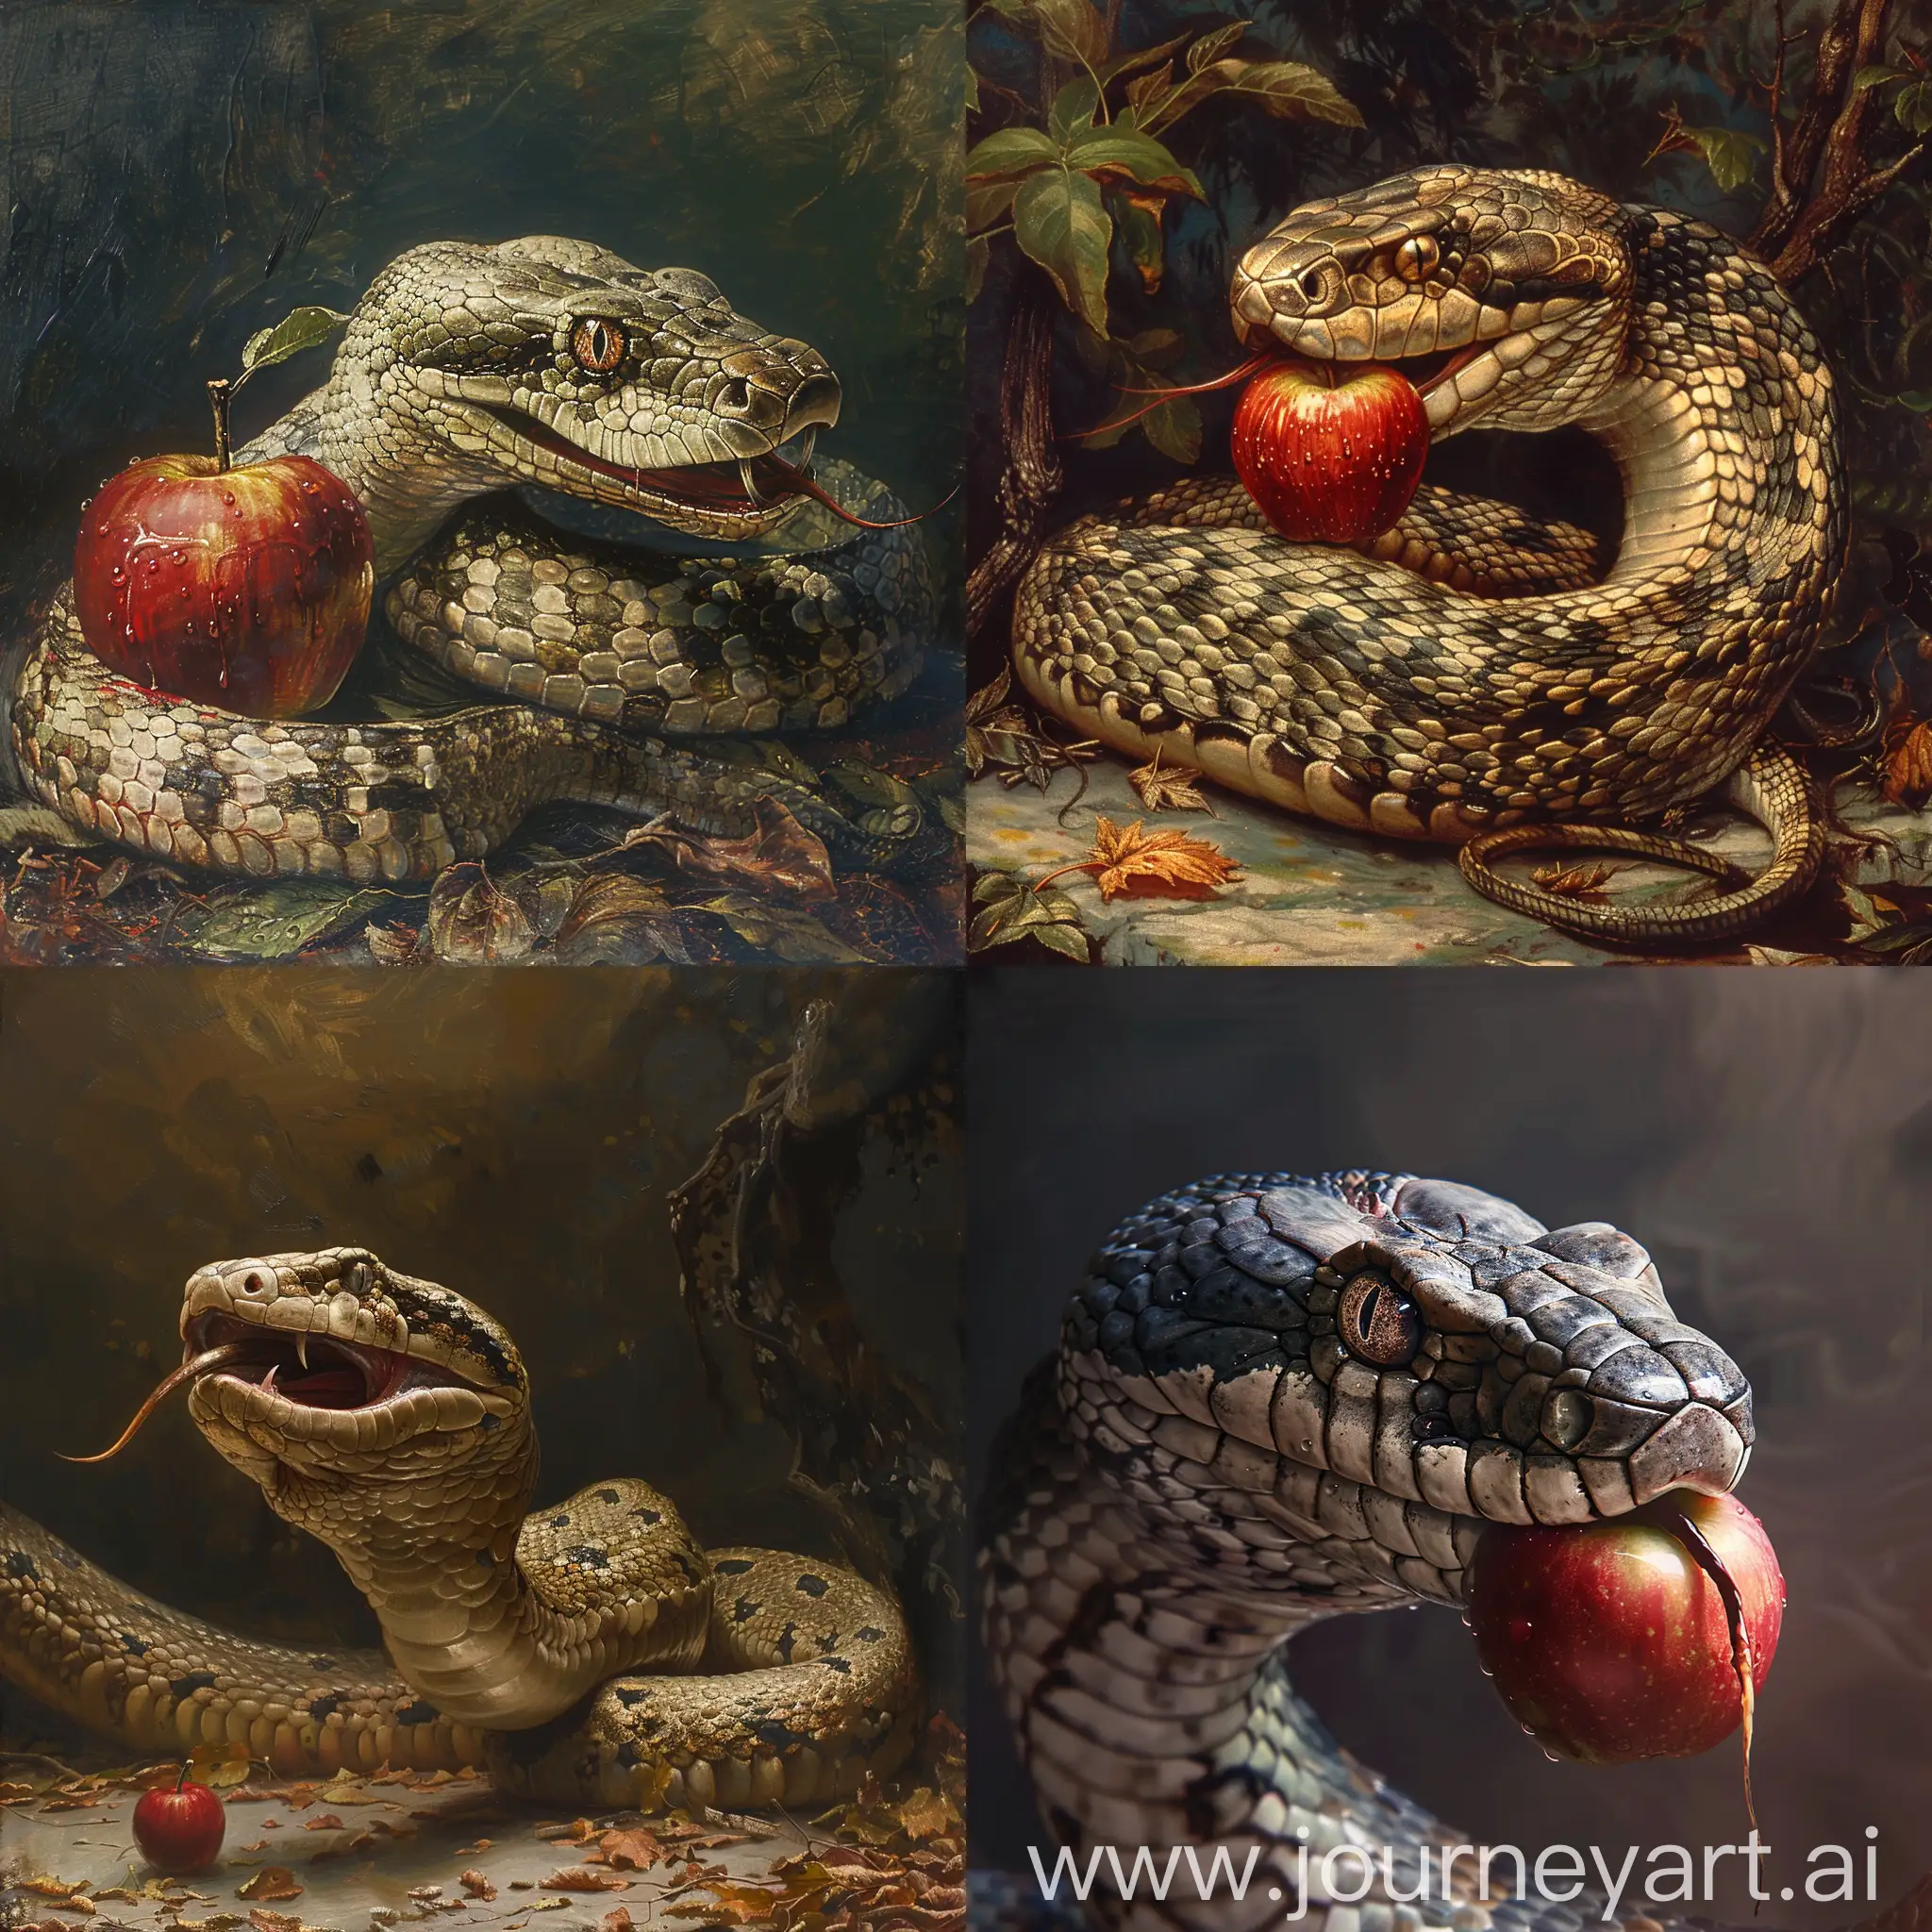 Serpent-Devouring-Apple-Sinful-Temptation-in-a-Forbidden-Garden